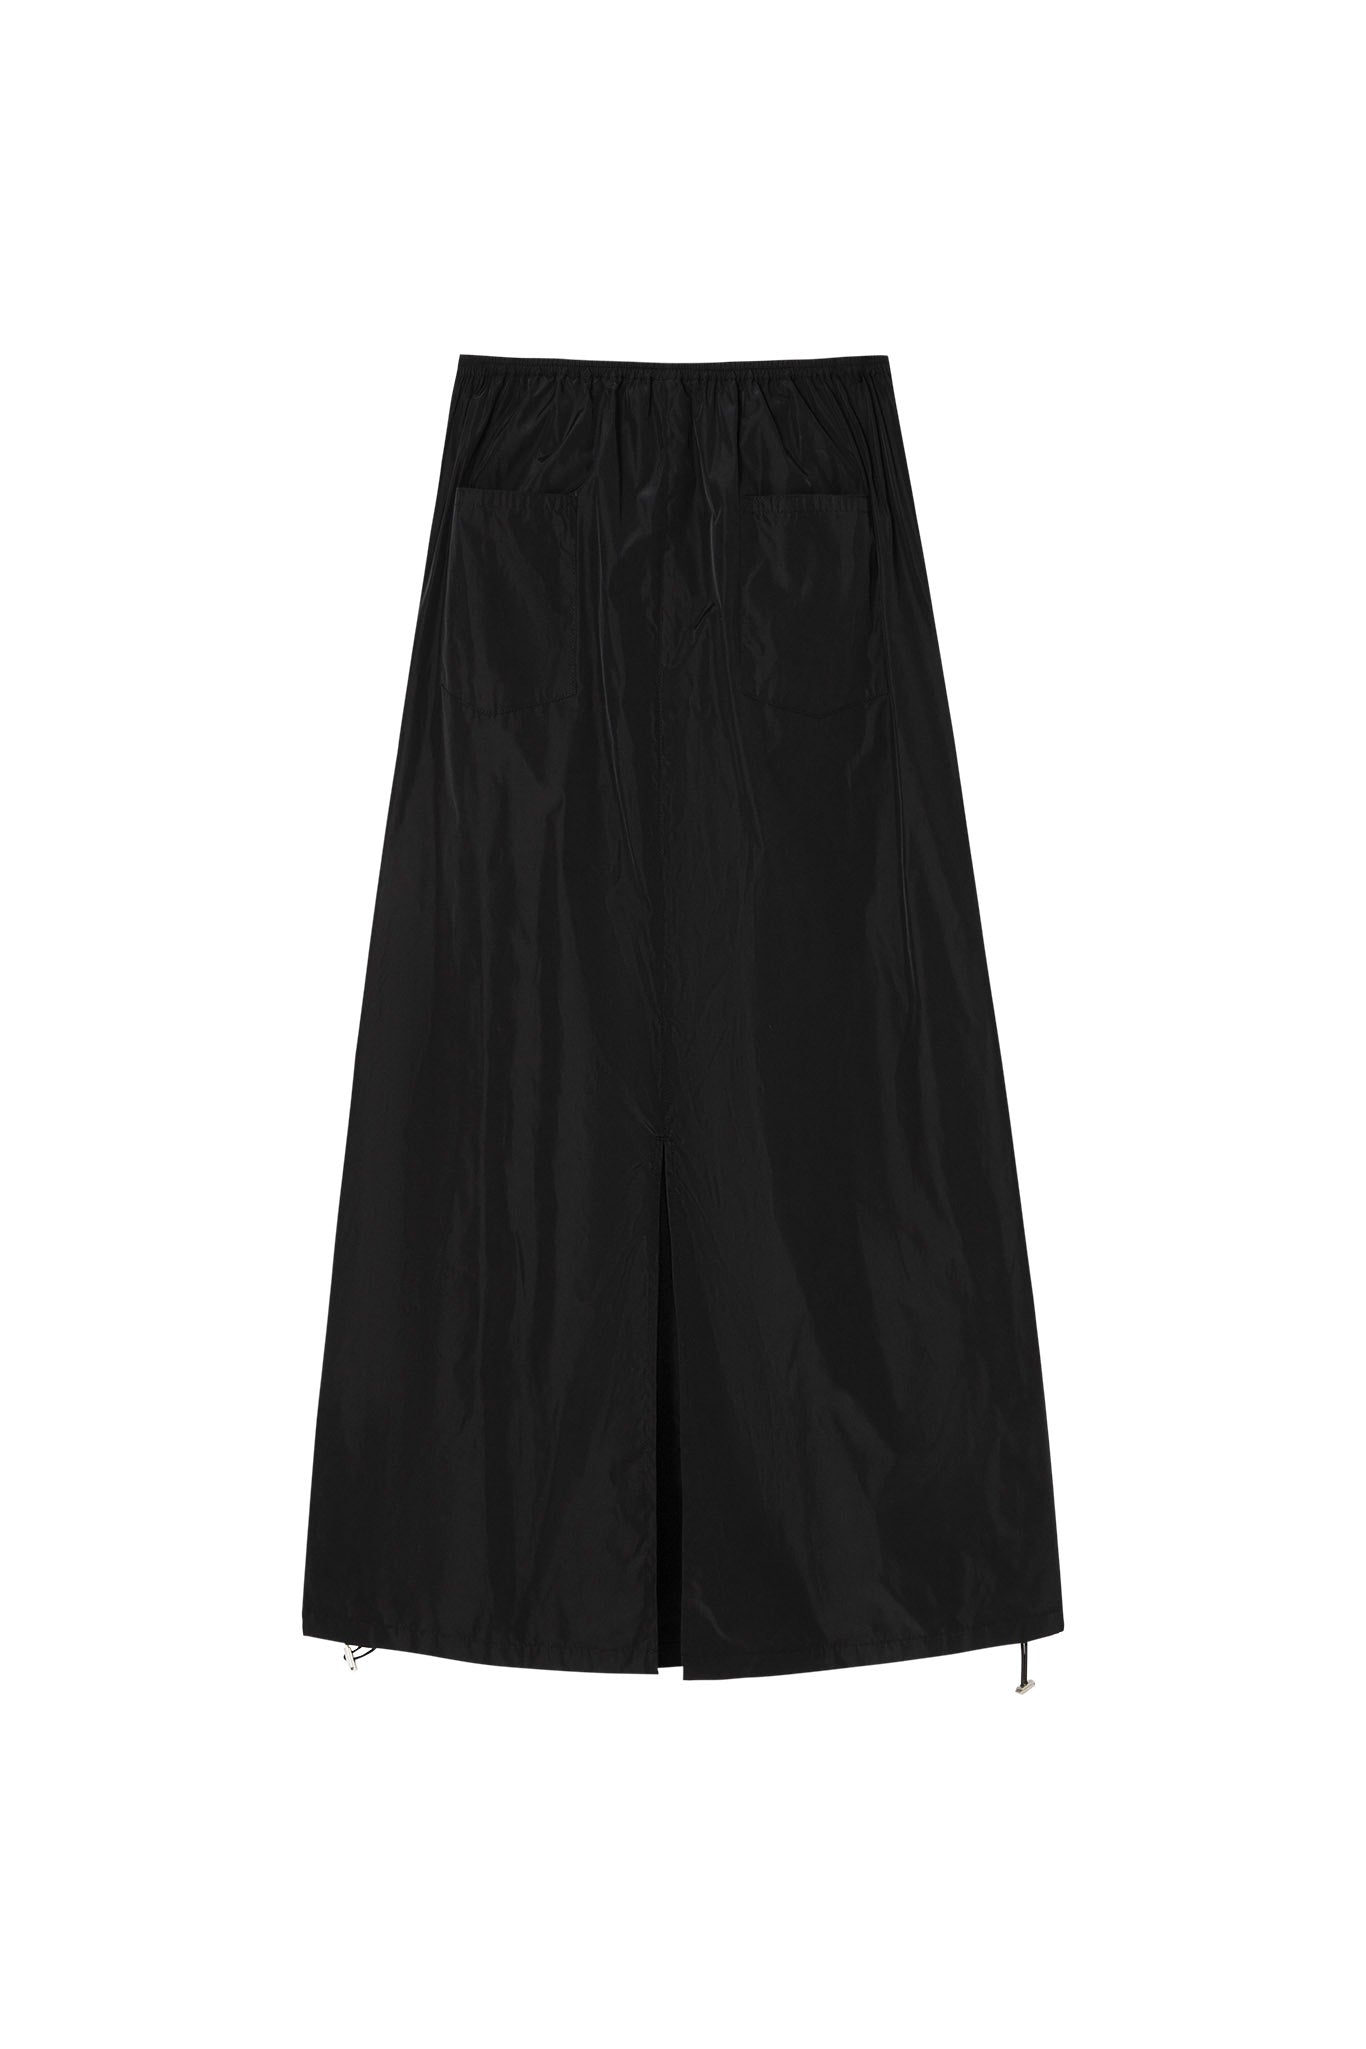 [tageechita] Side drawstring tight skirt